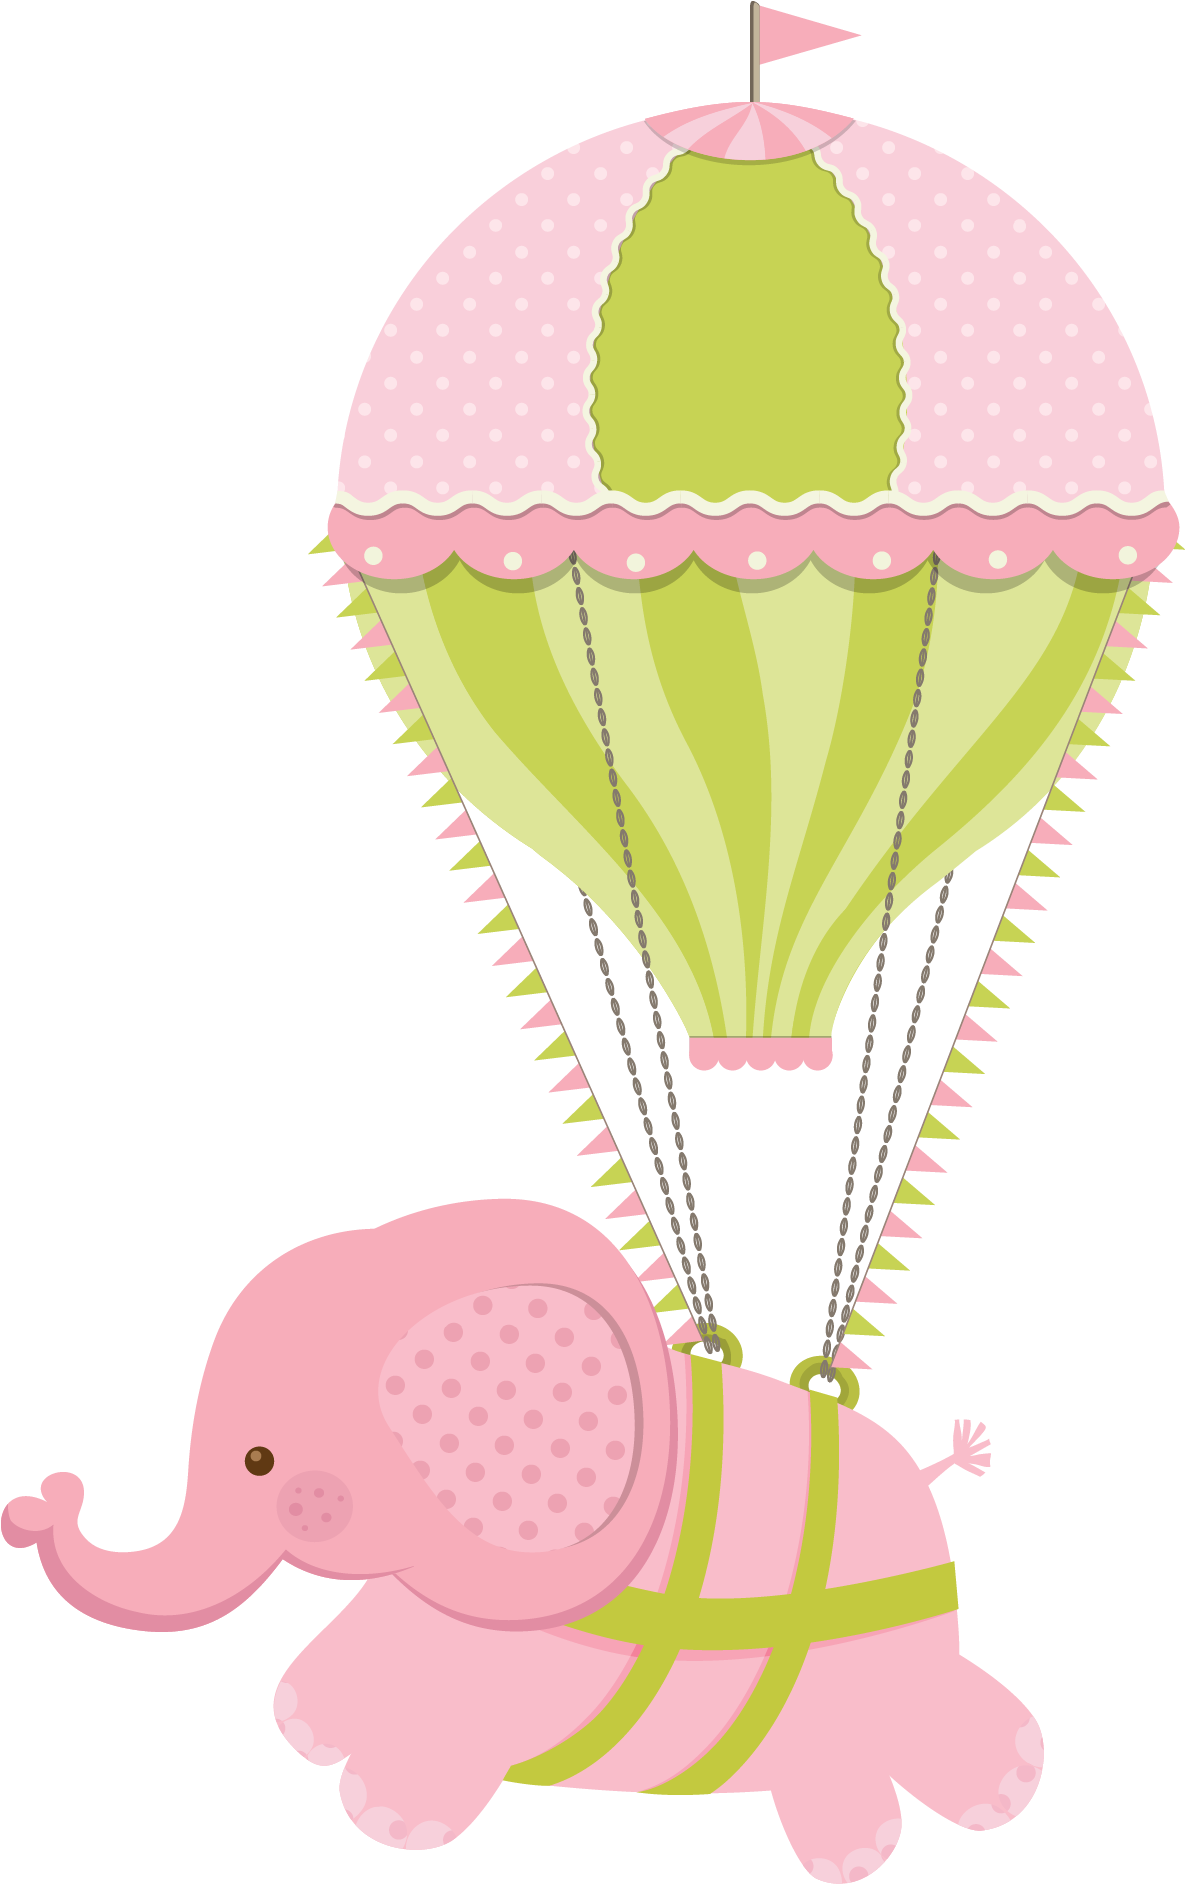 Http - //daniellemoraesfalcao - Minus - Com/mbkhfmrfcopr6z - Cartoon Baby Shower Hot Air Balloon Png (1184x1903)